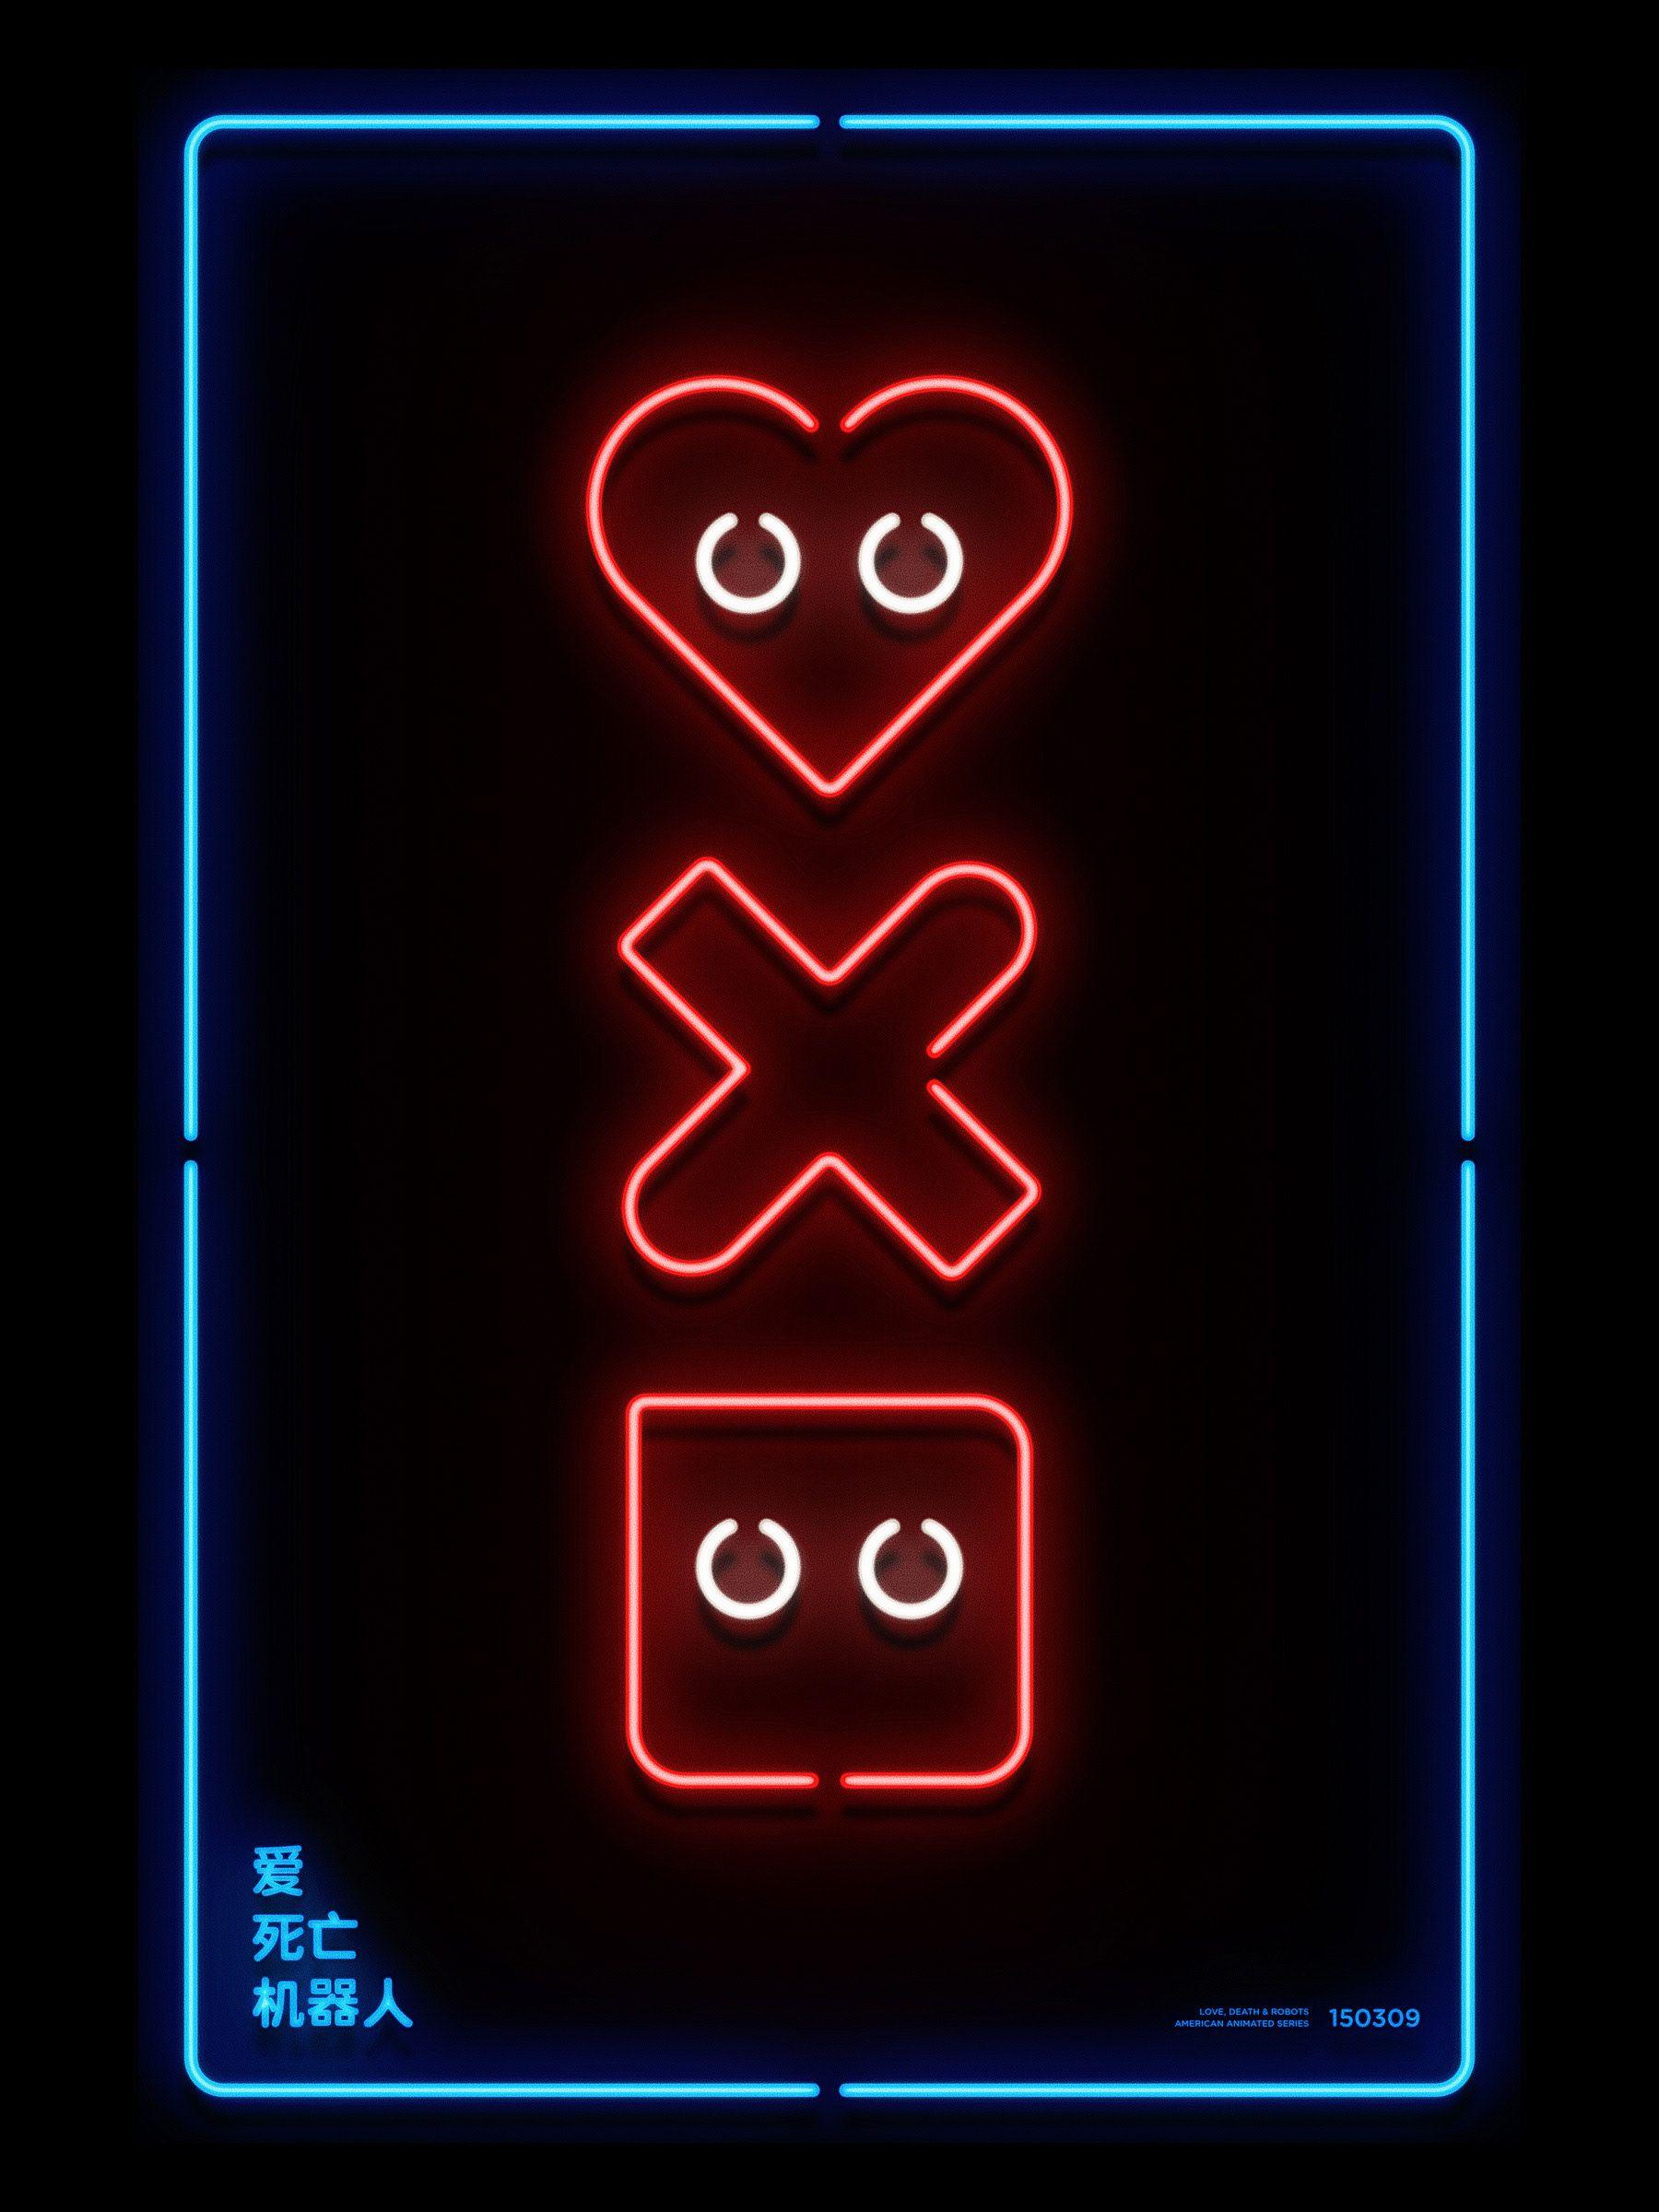 Love, Death &Amp; Robots Hd Logo Wallpapers